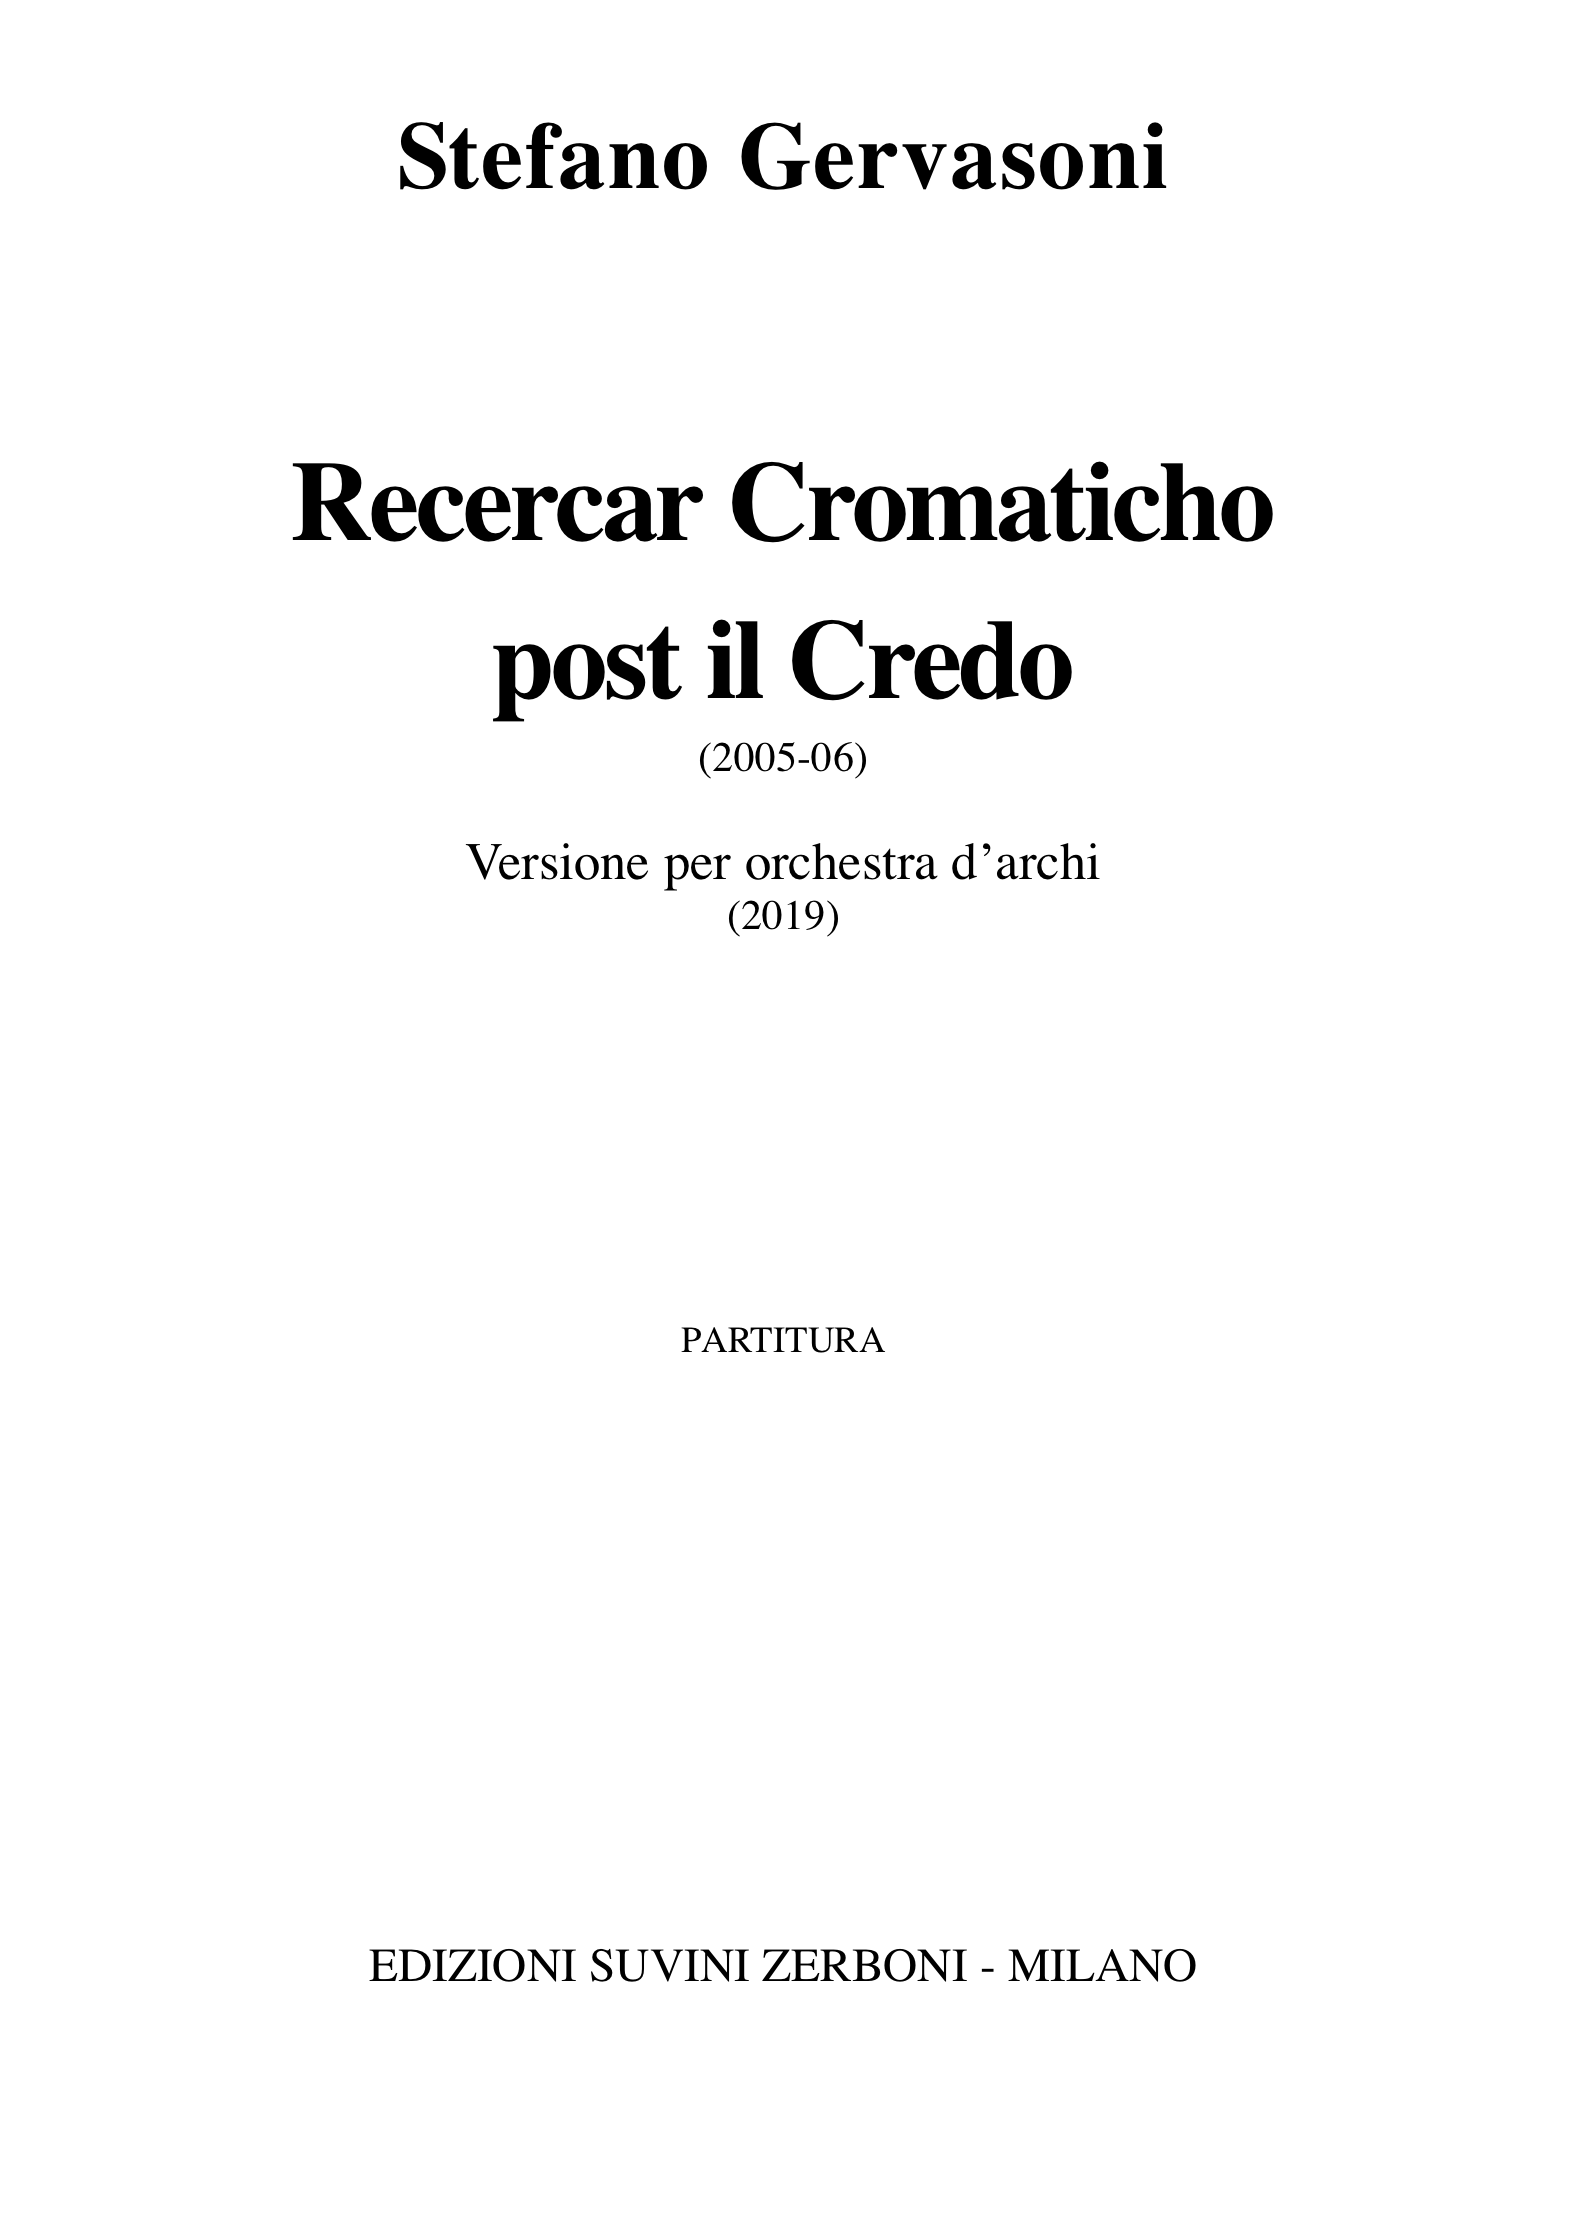 Recercar cromaticho_Gervasoni 1